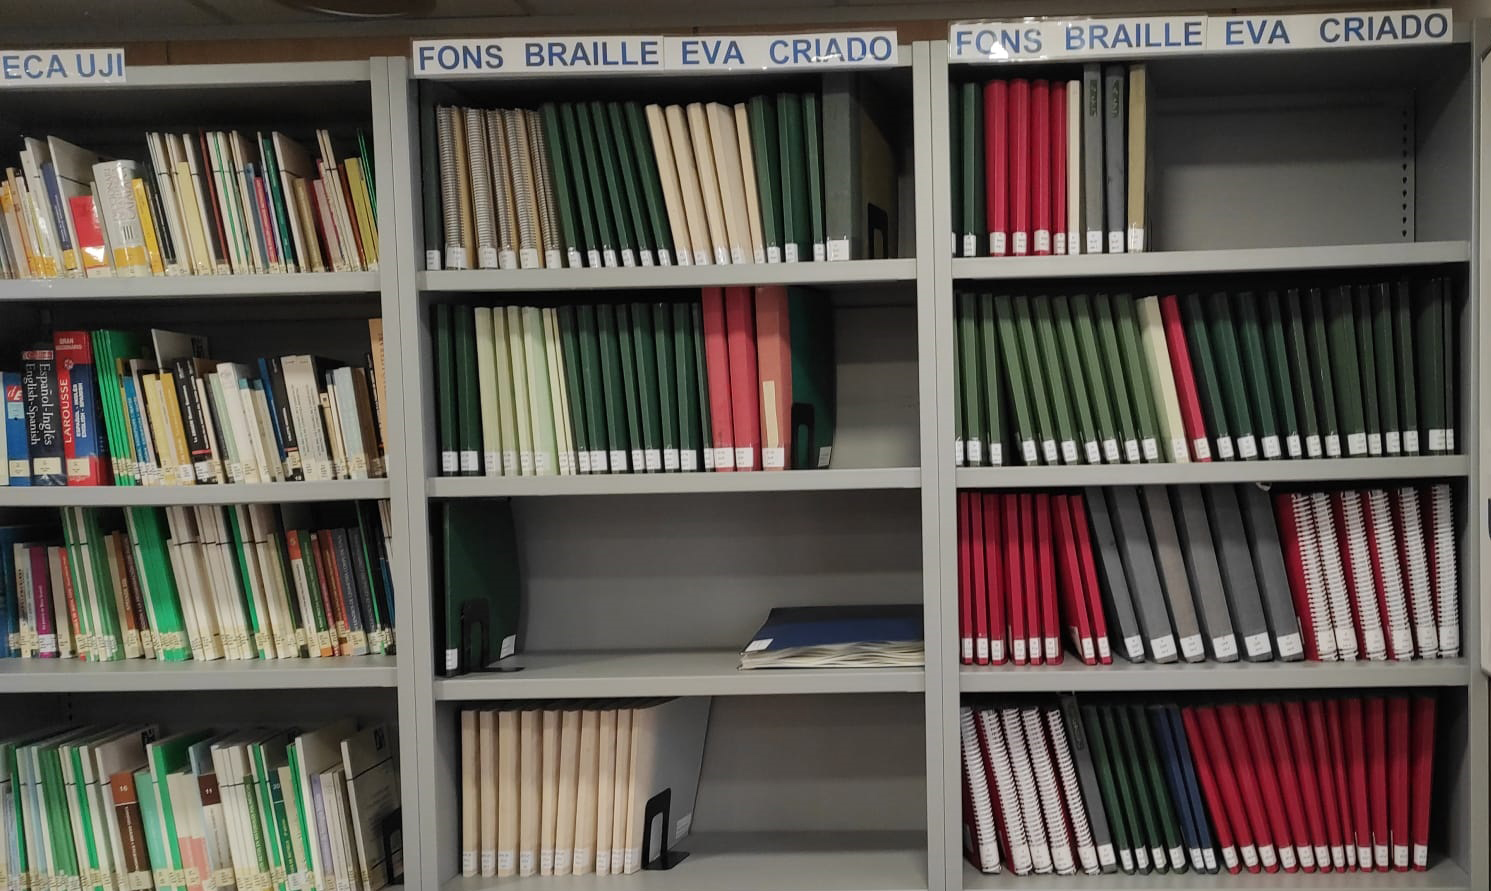 La Biblioteca Municipal de Vinaròs rep una donació de llibres escrits en sistema Braille